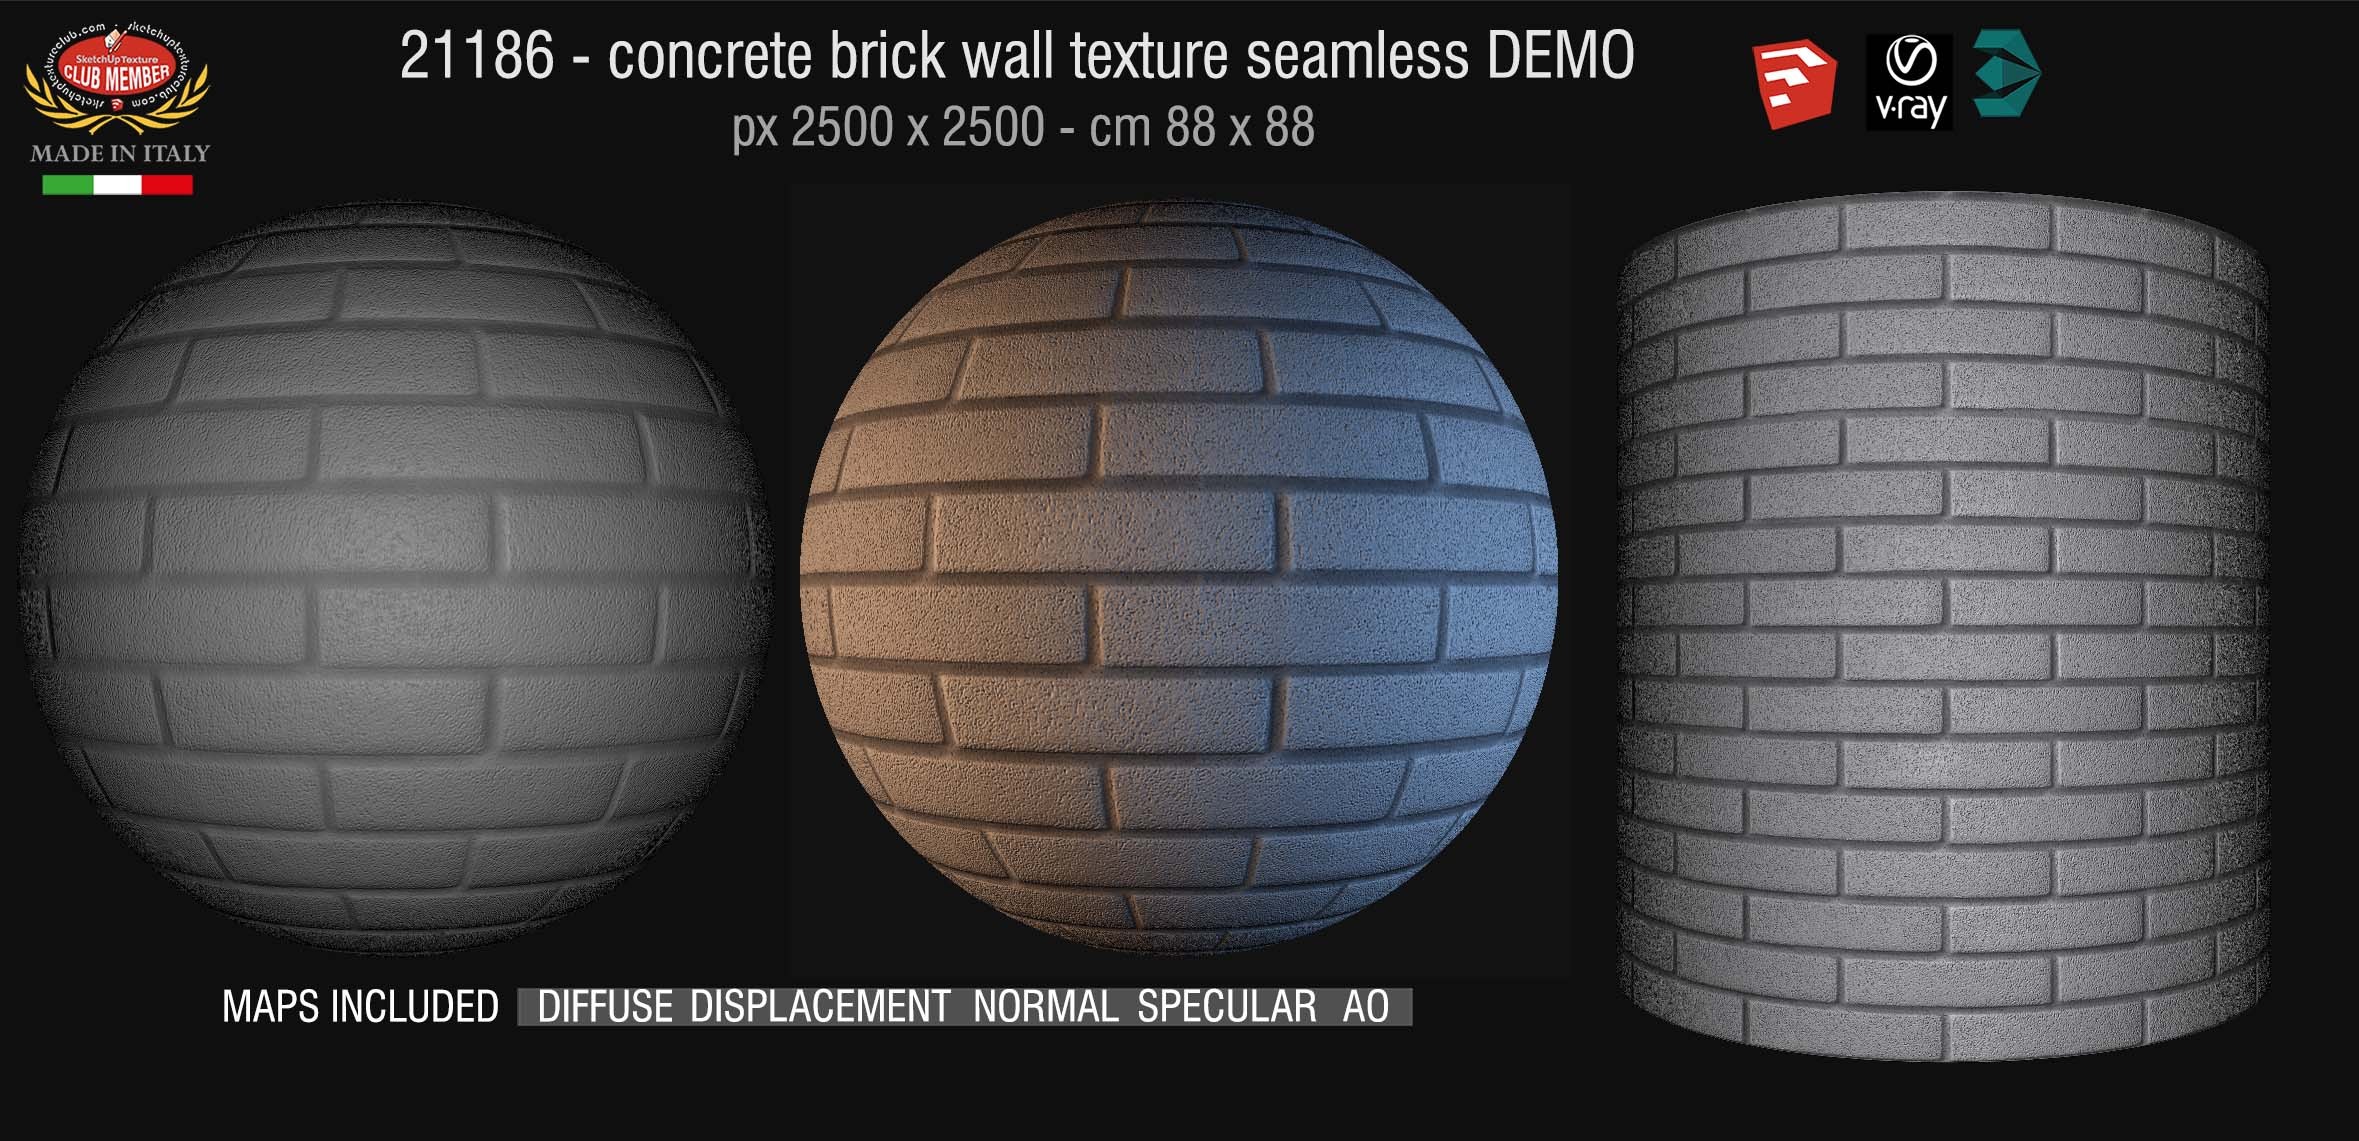 21186 - Concrete brick wall texture + maps DEMO